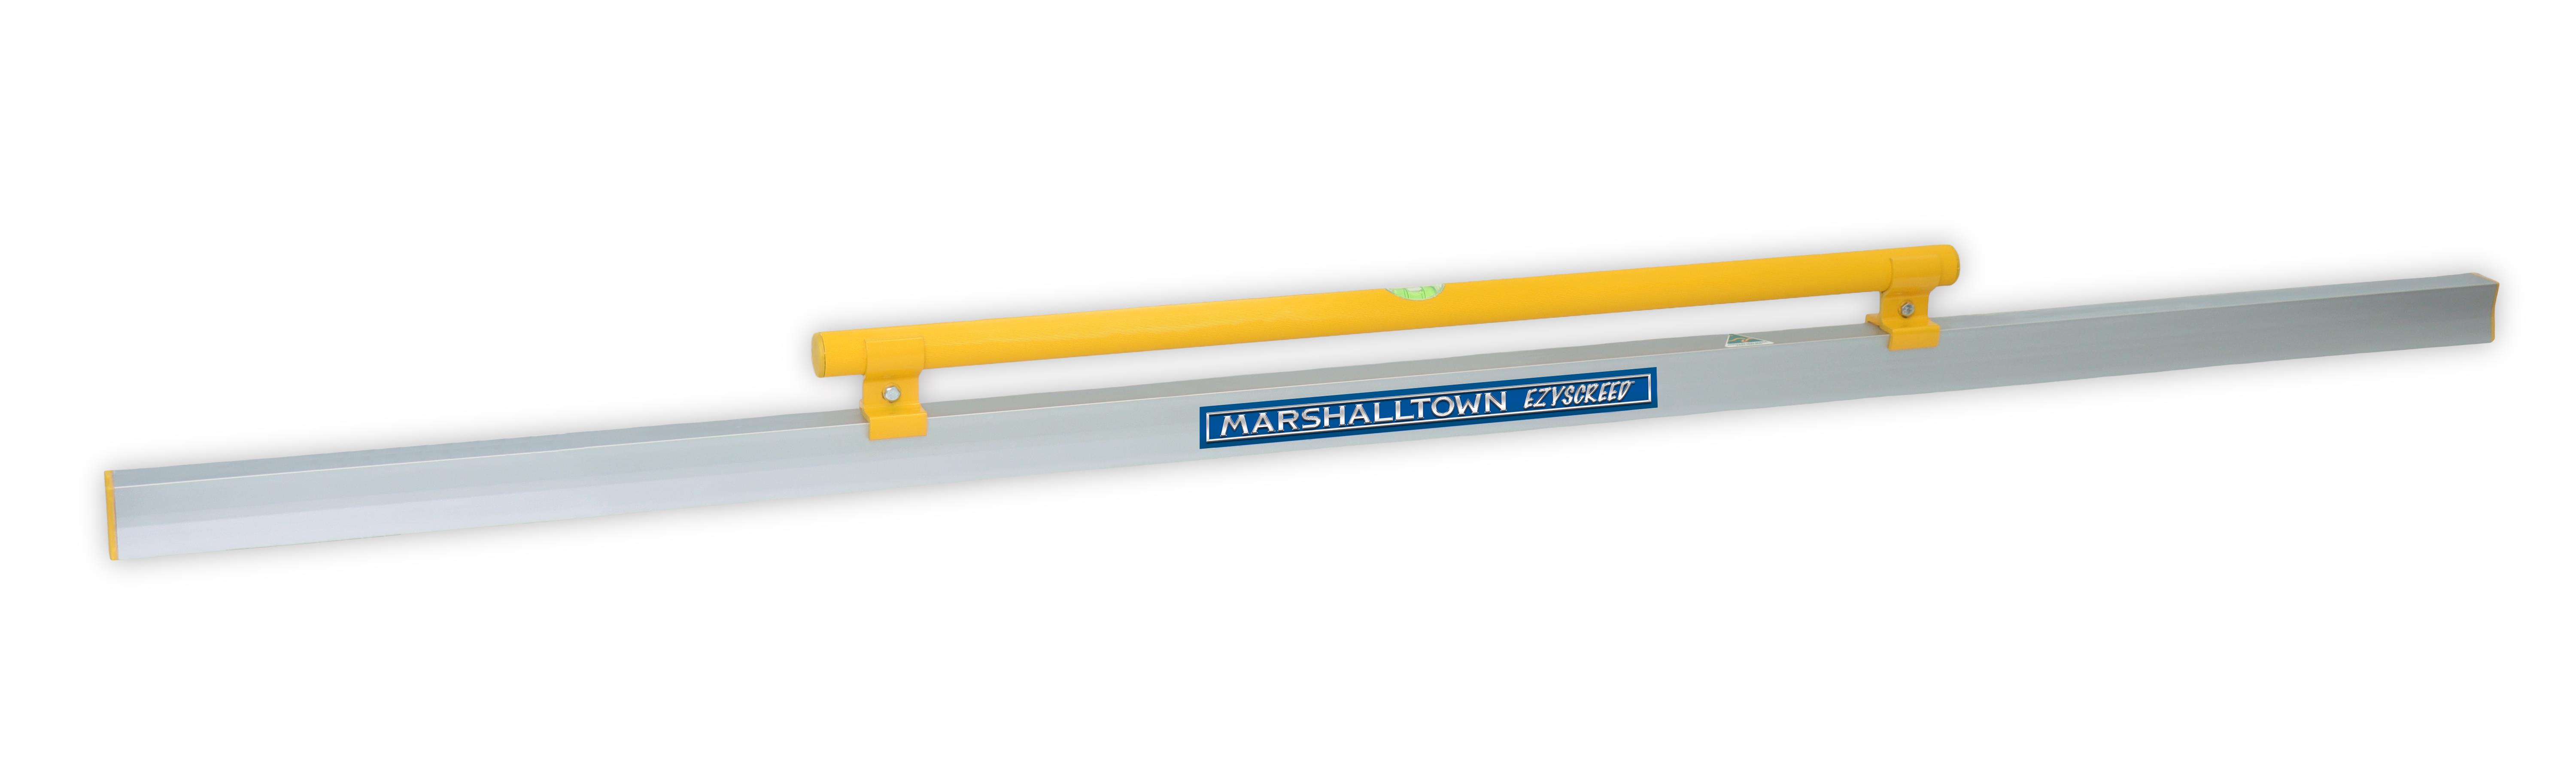 Marshalltown (28396) product